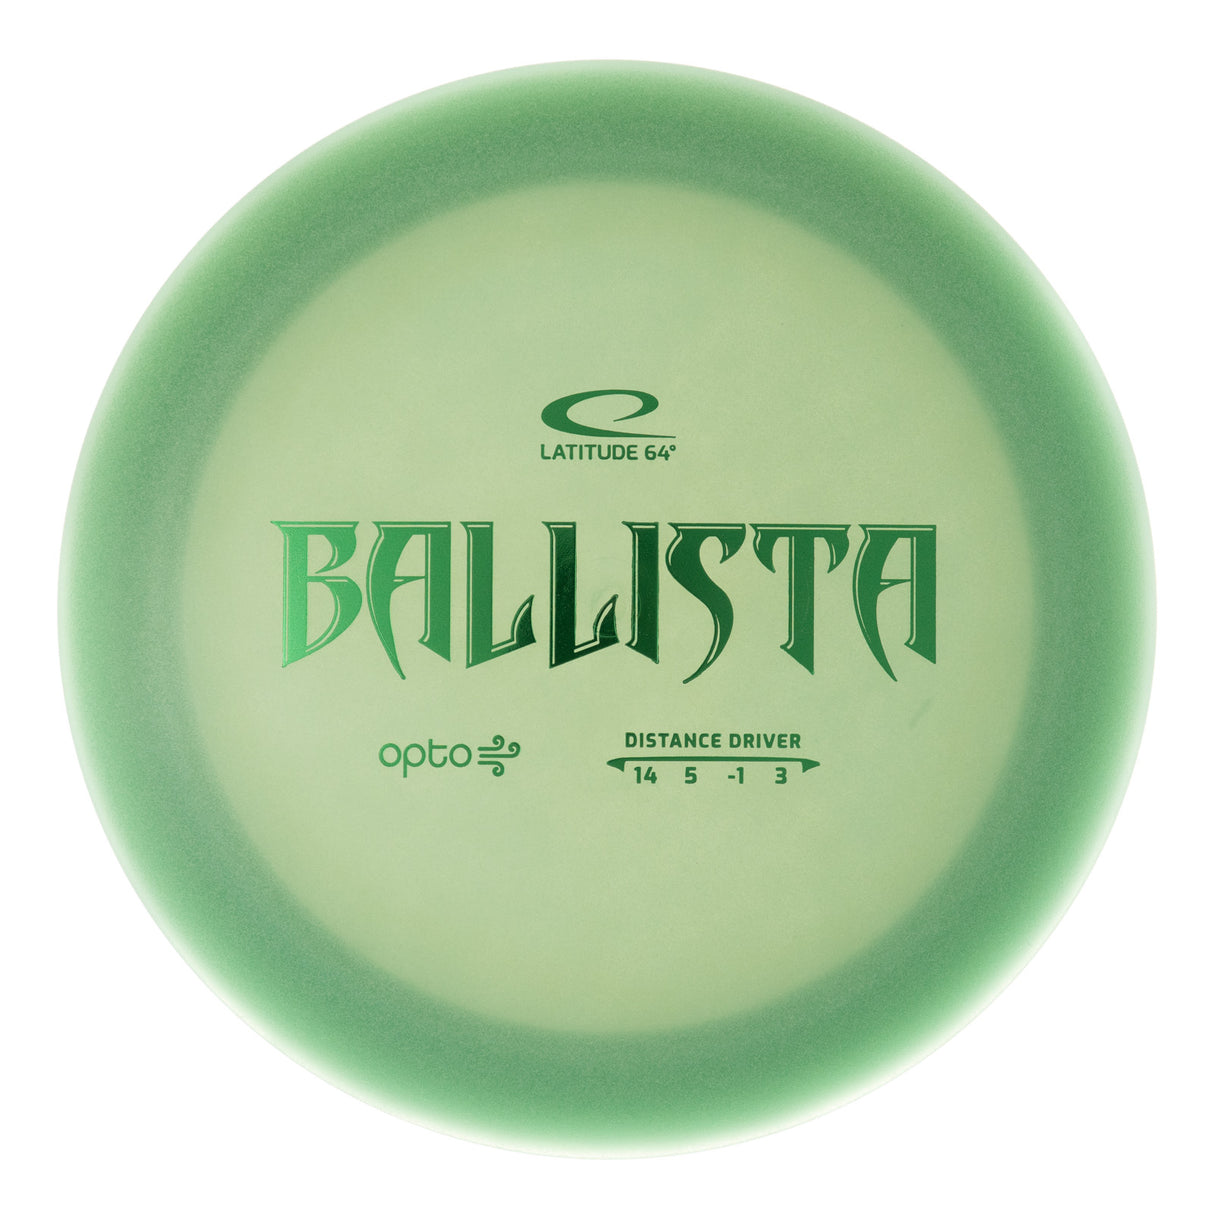 Latitude 64 Ballista - Opto Air 164g | Style 0001